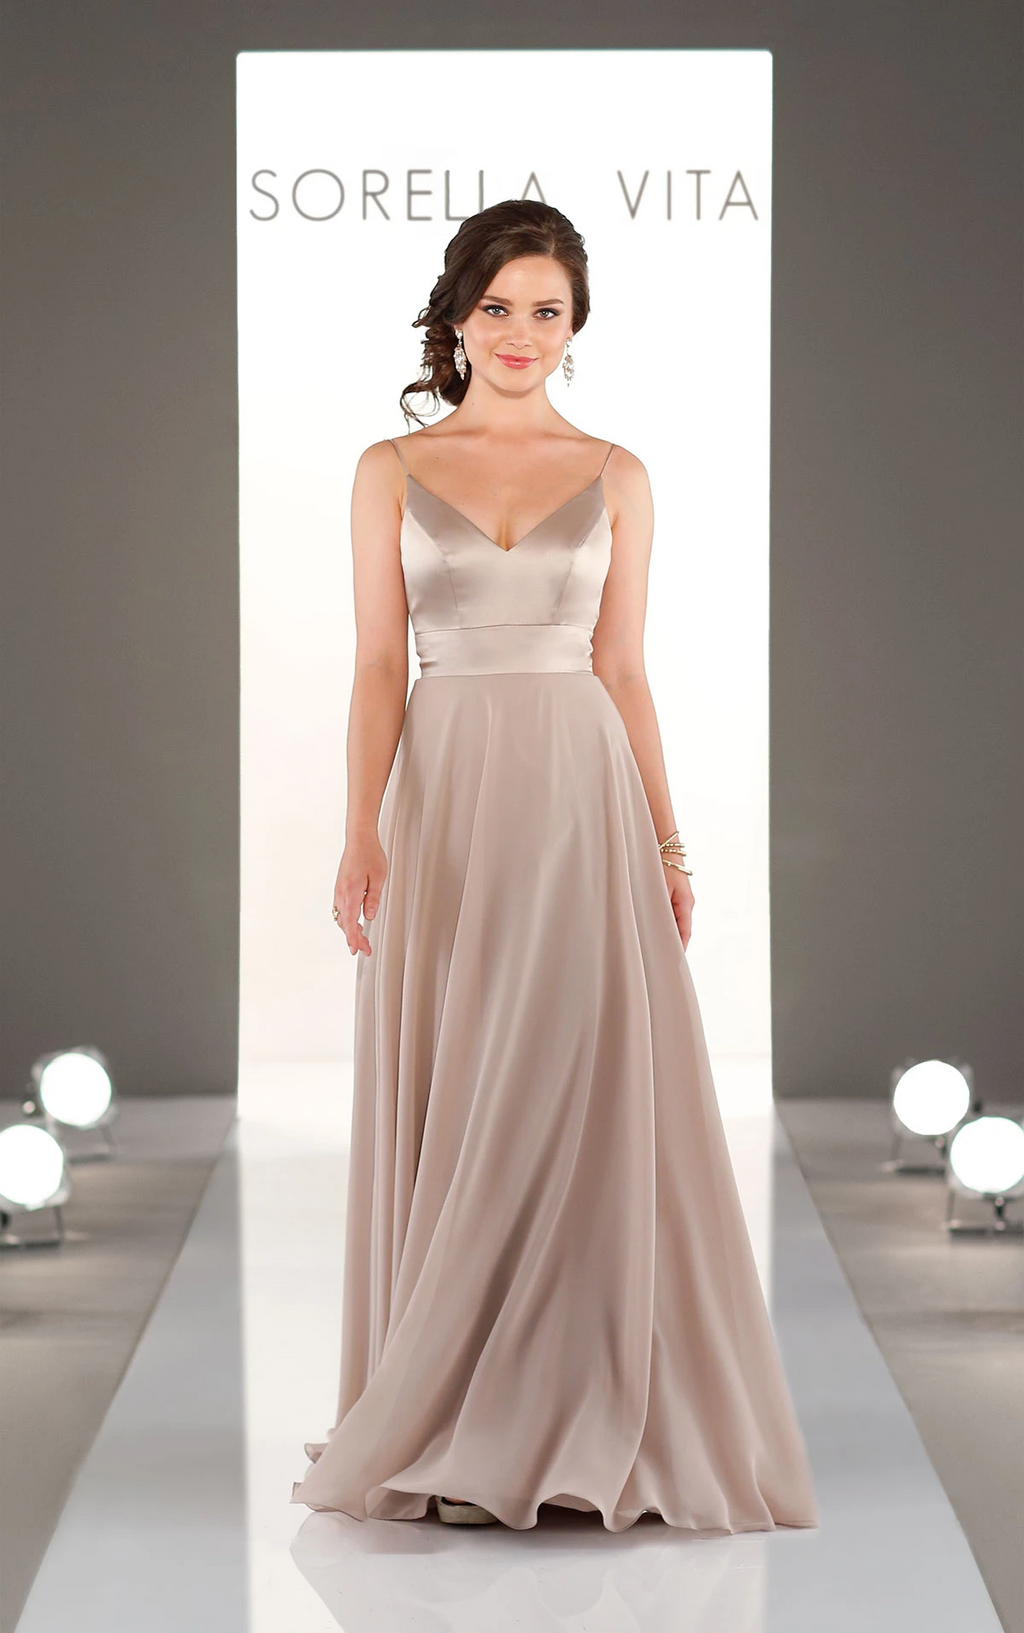 Sorella Vita Dress Style 9088 (Vintage Rose) Prom, Ball., Black-tie, Bridesmaid, Pageant